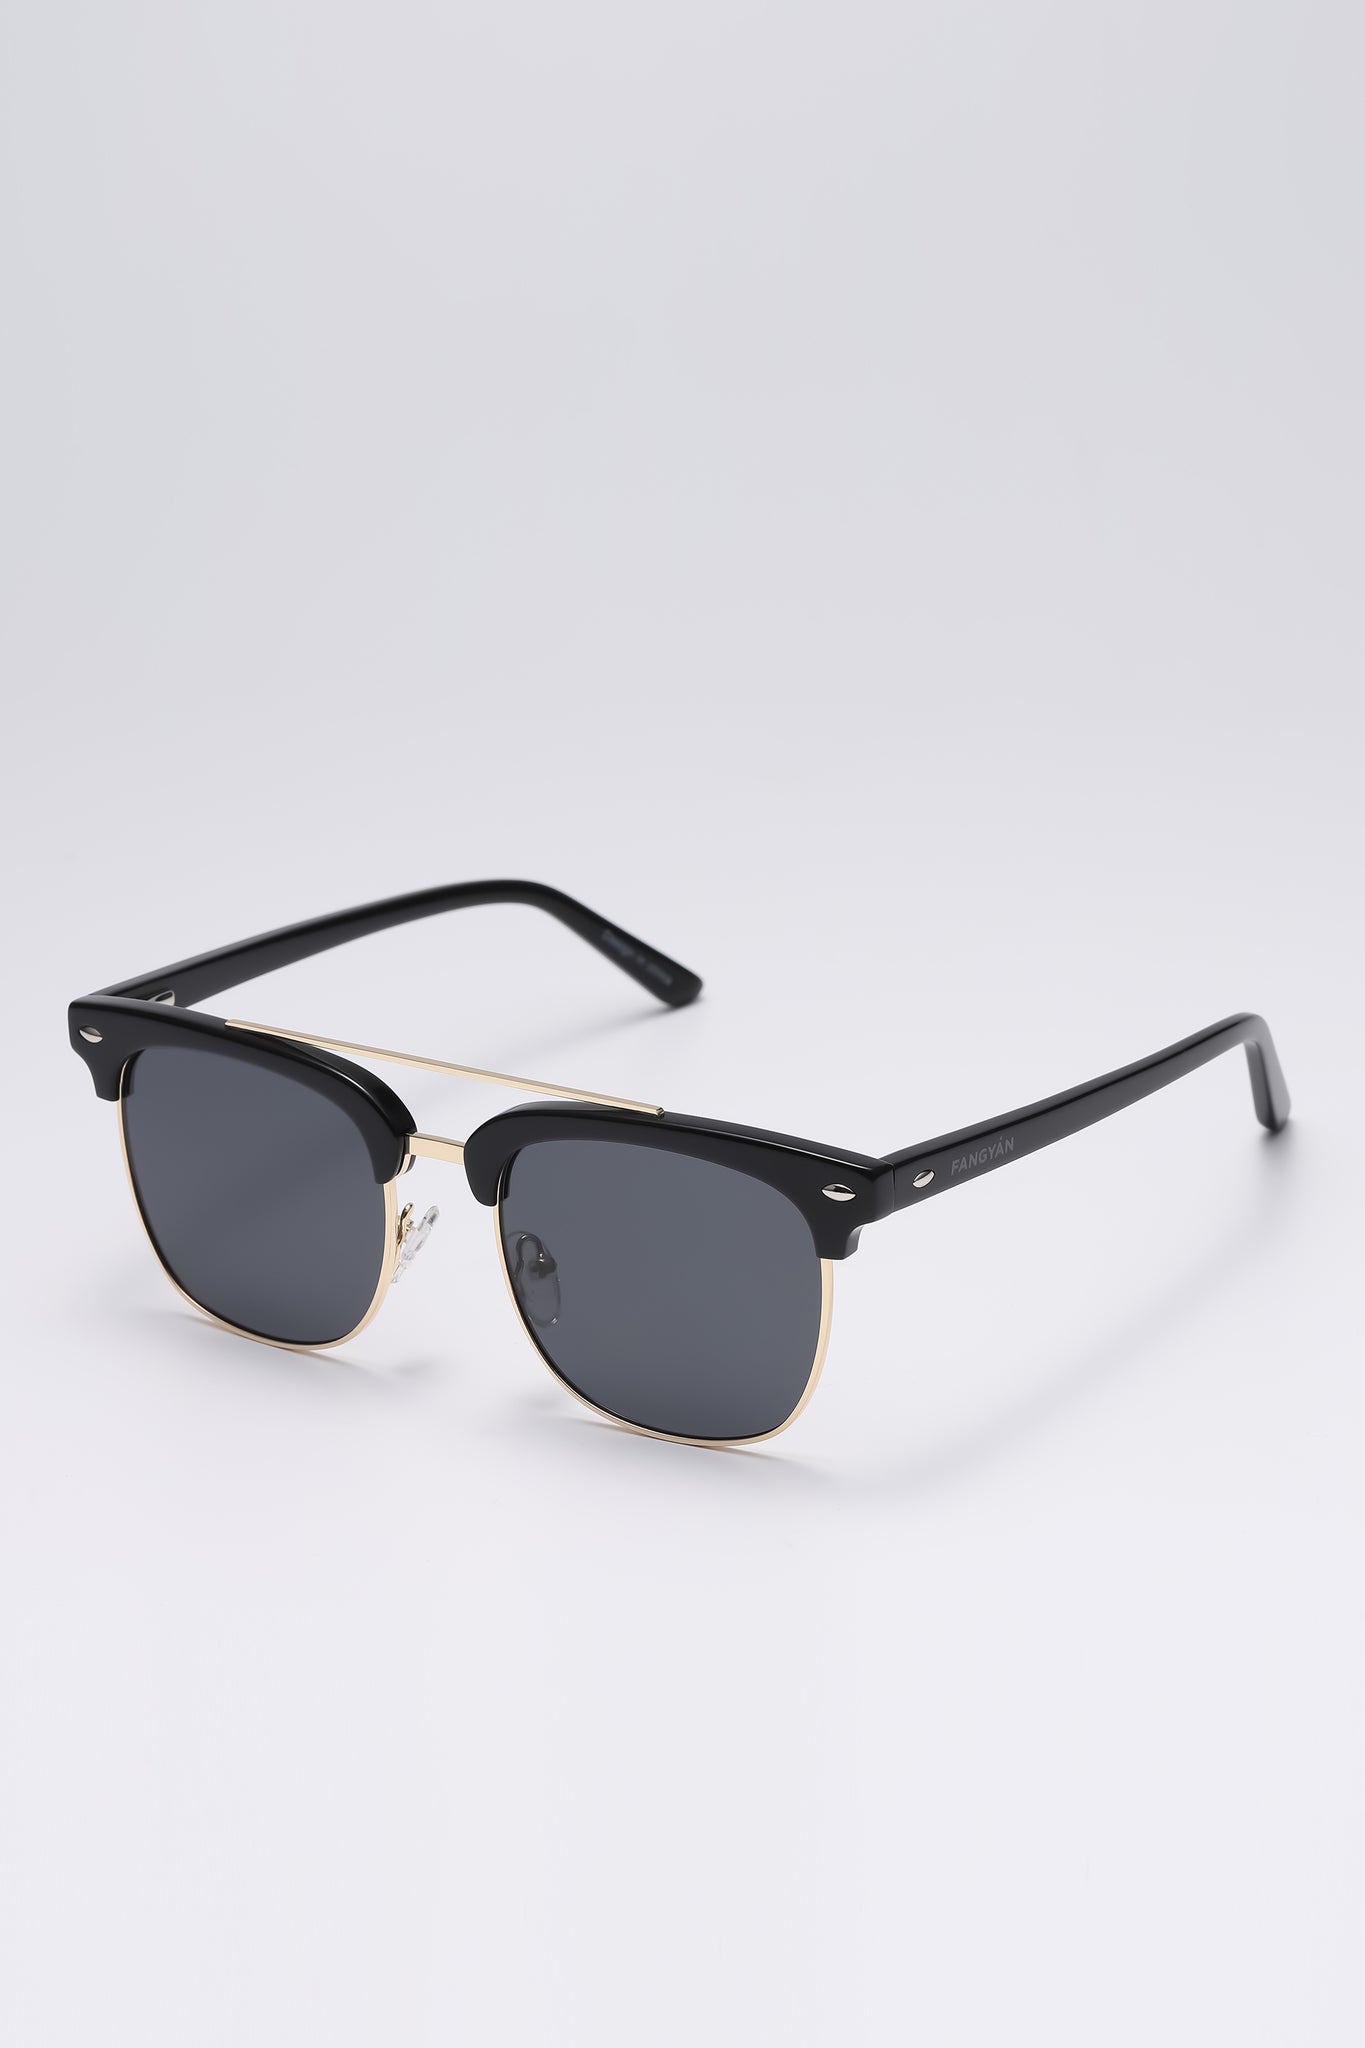 Fangyan | Round Acetate-Metal Black Sunglasses